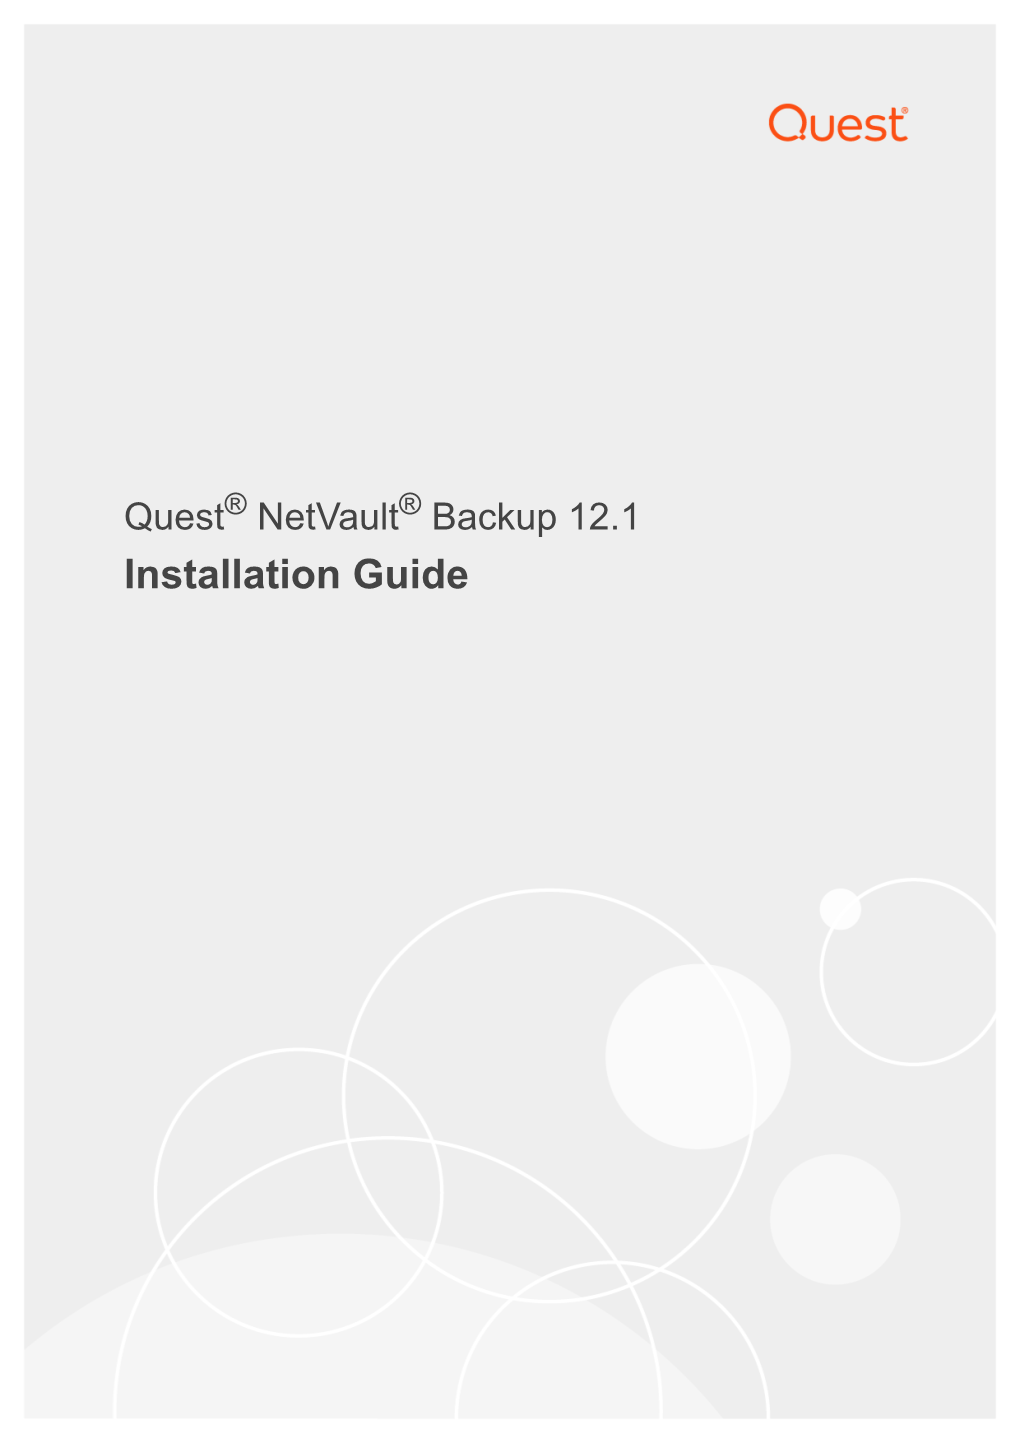 Netvault Backup Installation Guide Updated - August 2018 Software Version - 12.1 NVG-105-12.1-EN-01 Contents